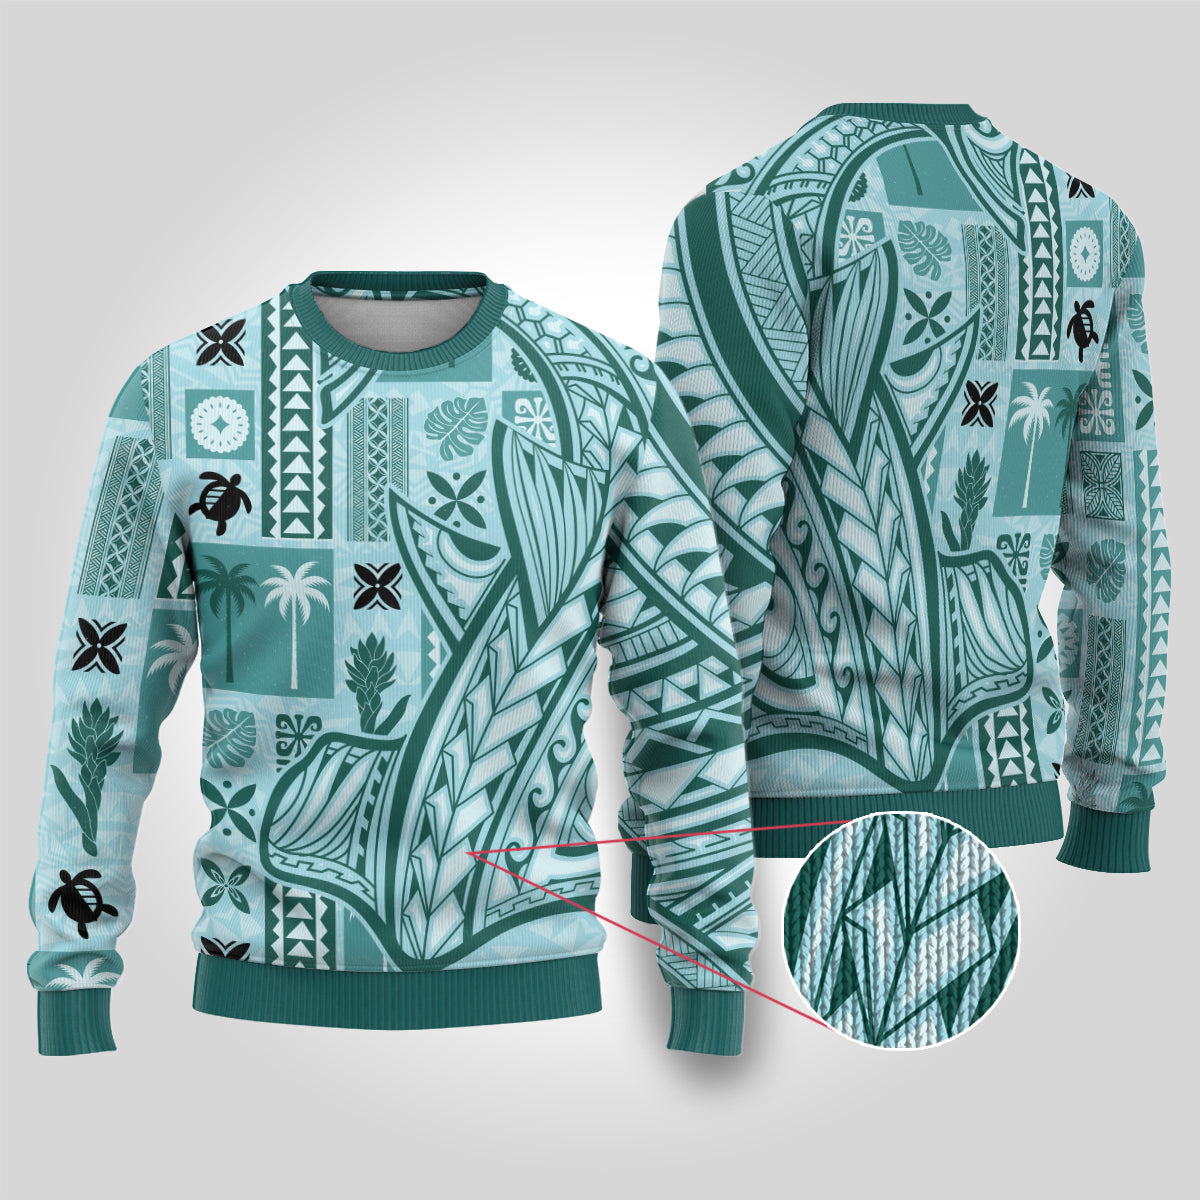 Samoa Tapa Ugly Christmas Sweater Siapo Mix Tatau Patterns - Teal LT7 Teal - Polynesian Pride